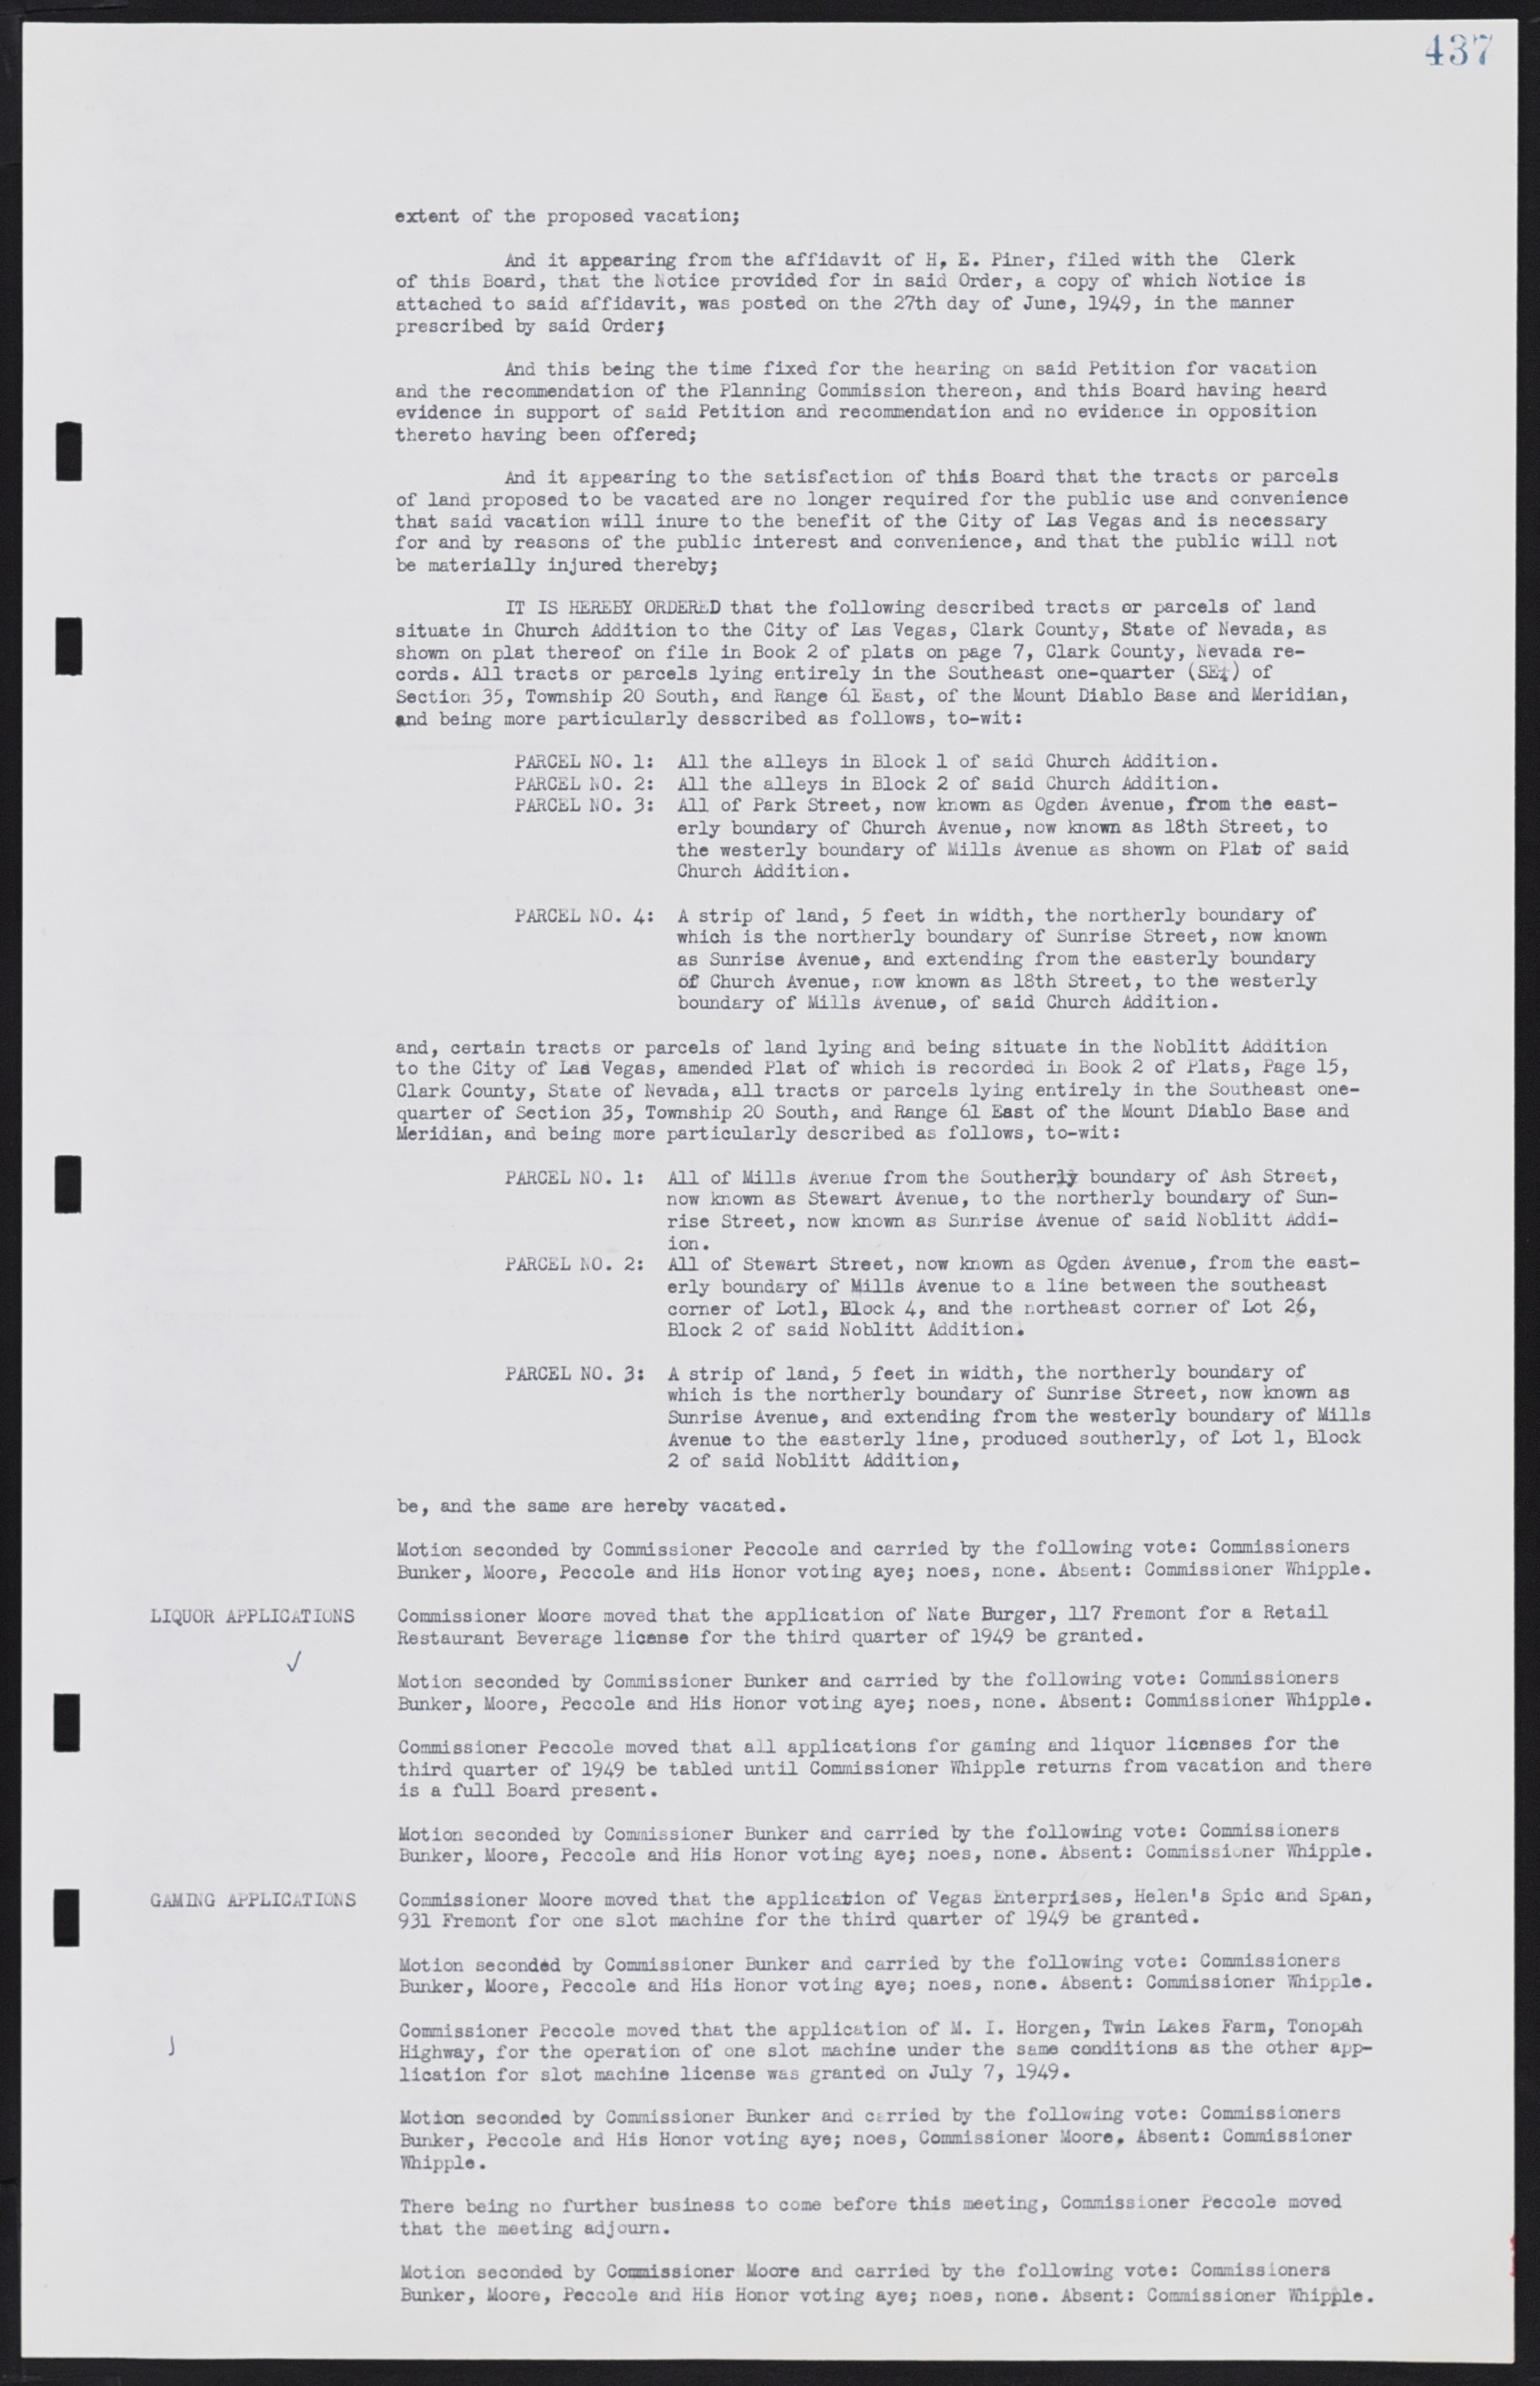 Las Vegas City Commission Minutes, January 7, 1947 to October 26, 1949, lvc000006-469